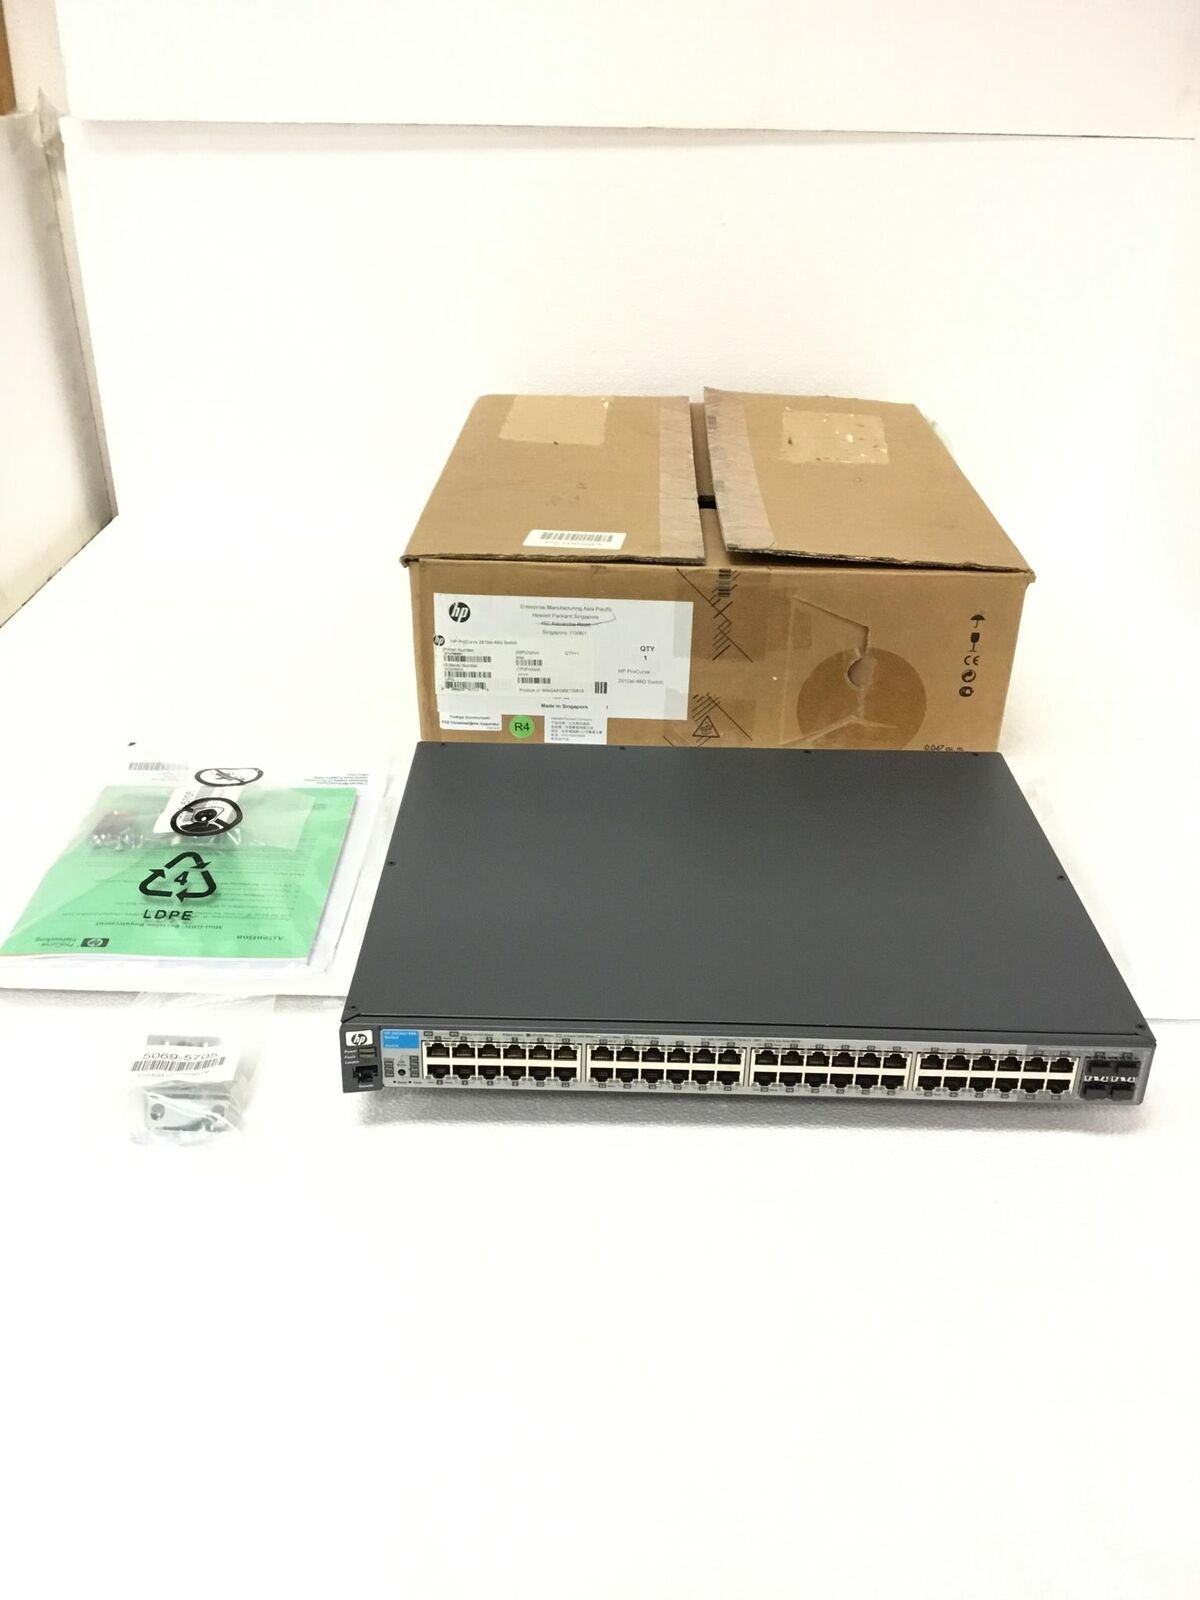 New HP Procurve ProCurve 2910al-48G Ethernet Switch J9147A#ABA, open Box FREESHP